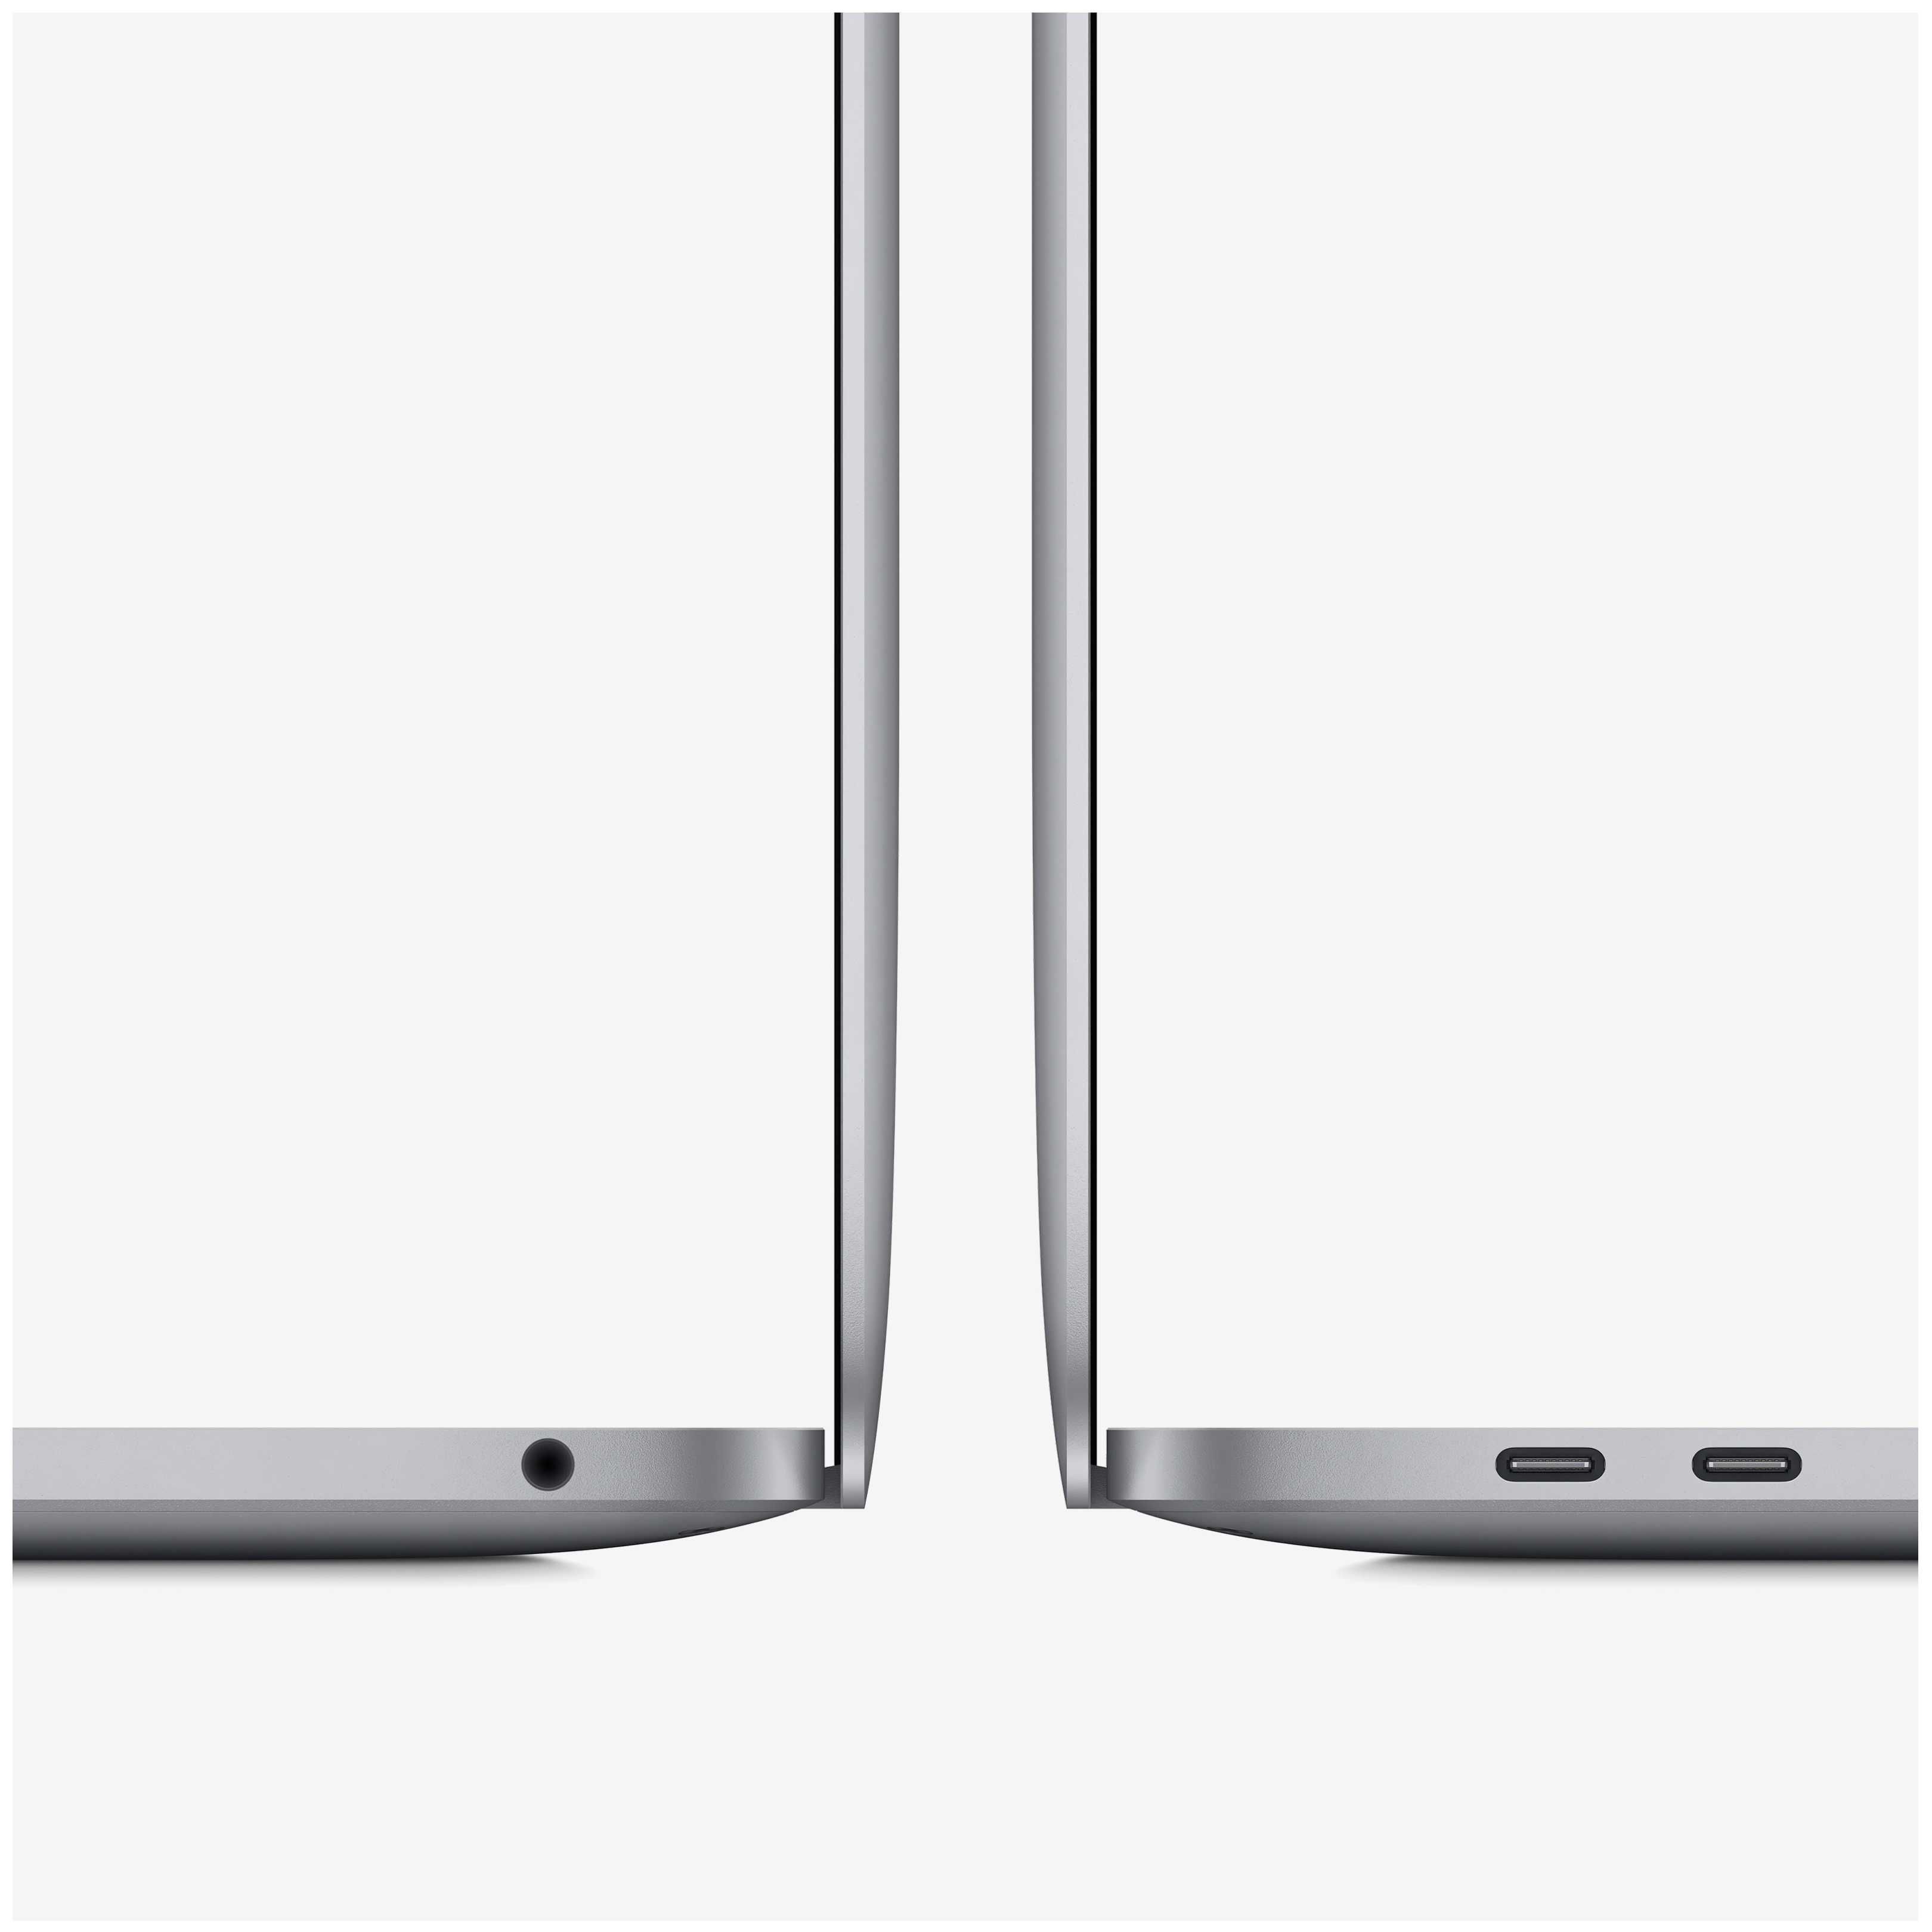 Macbook Pro M1 chip 8/256GB 13.3-inch (Touchbar bor)